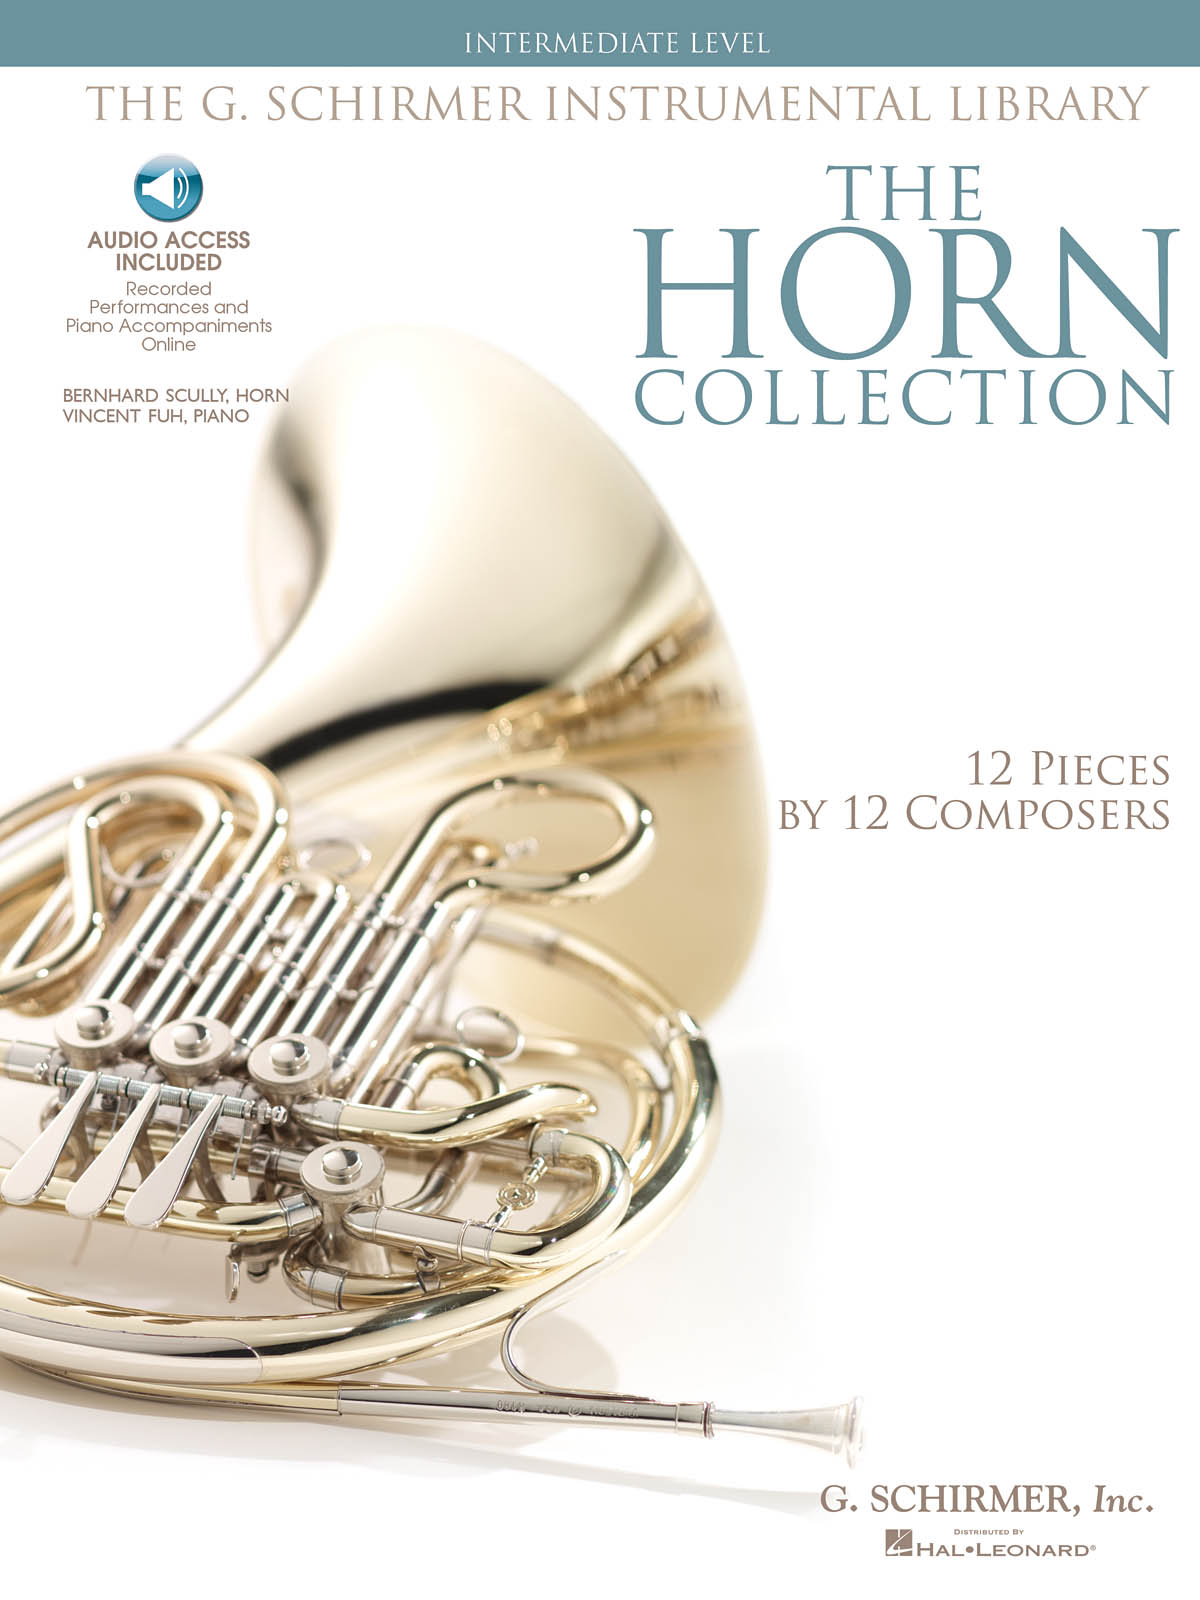 The Horn Collection - Intermediate Level / G. Schirmer Instrumental Library